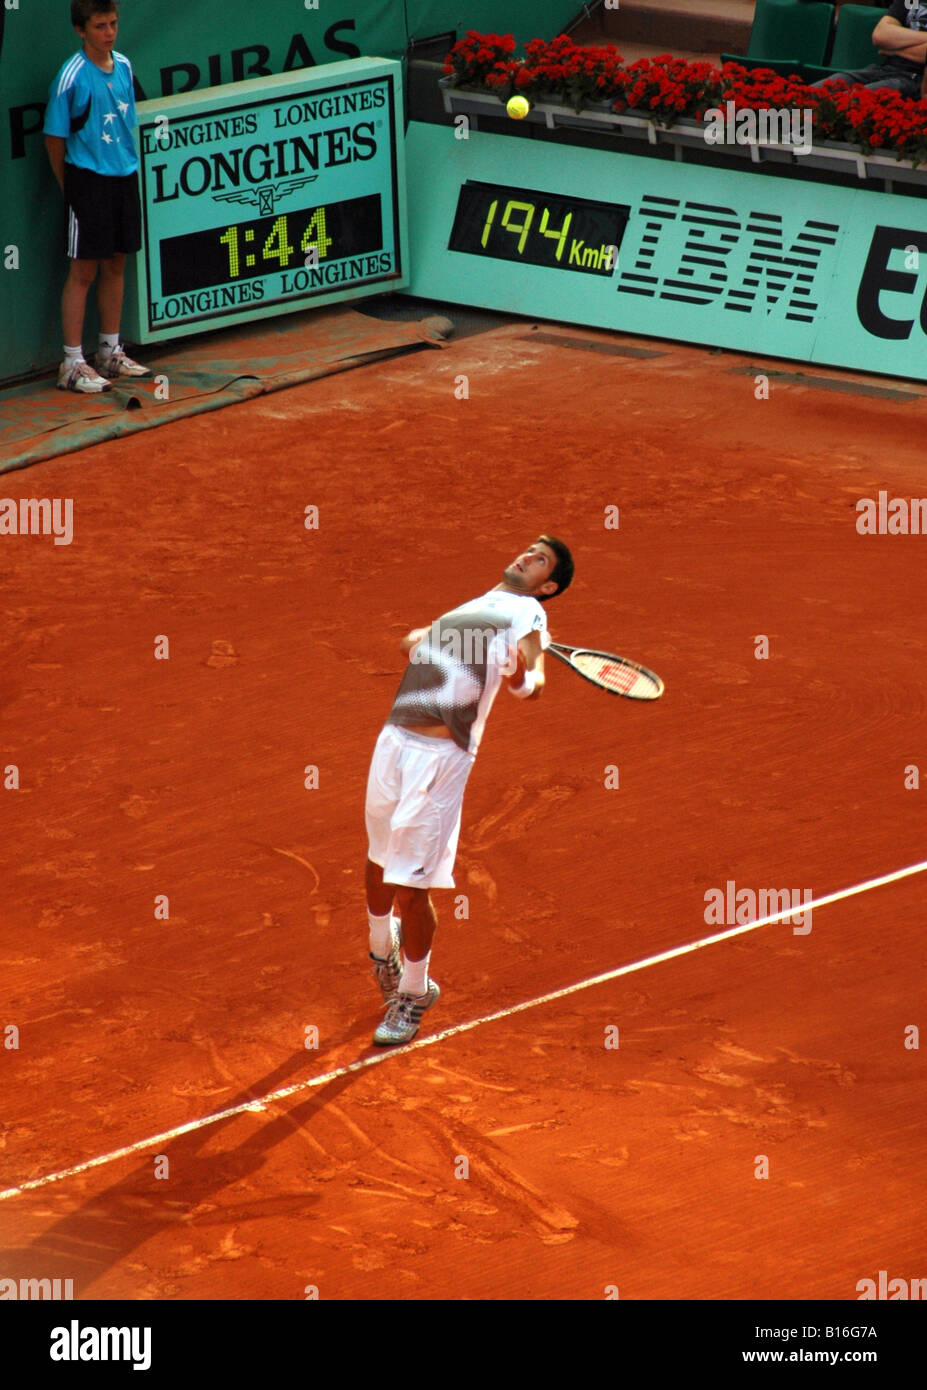 Novak Djokovic serving at Rolland Garros during the 2008 French Open tennis tournament Stock Photo